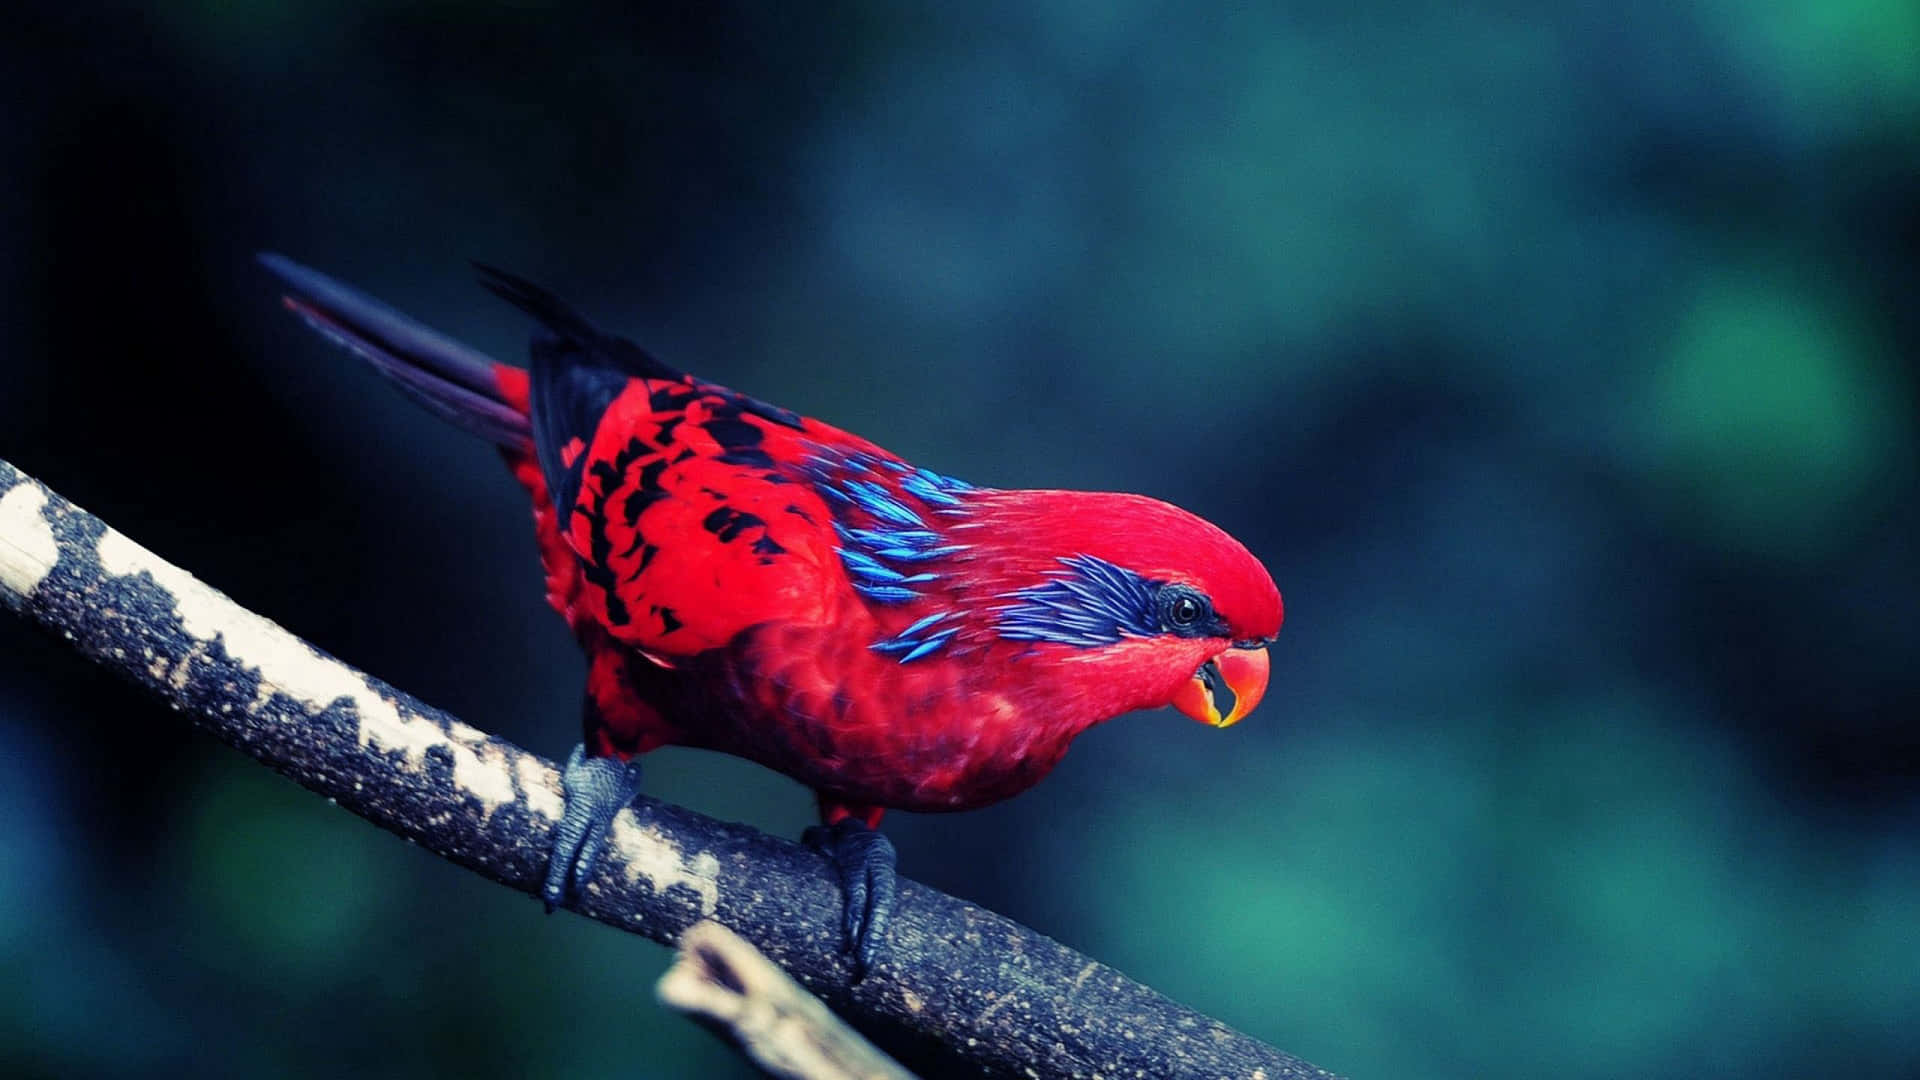 Vibrant Red Lory Bird On Branch.jpg Wallpaper